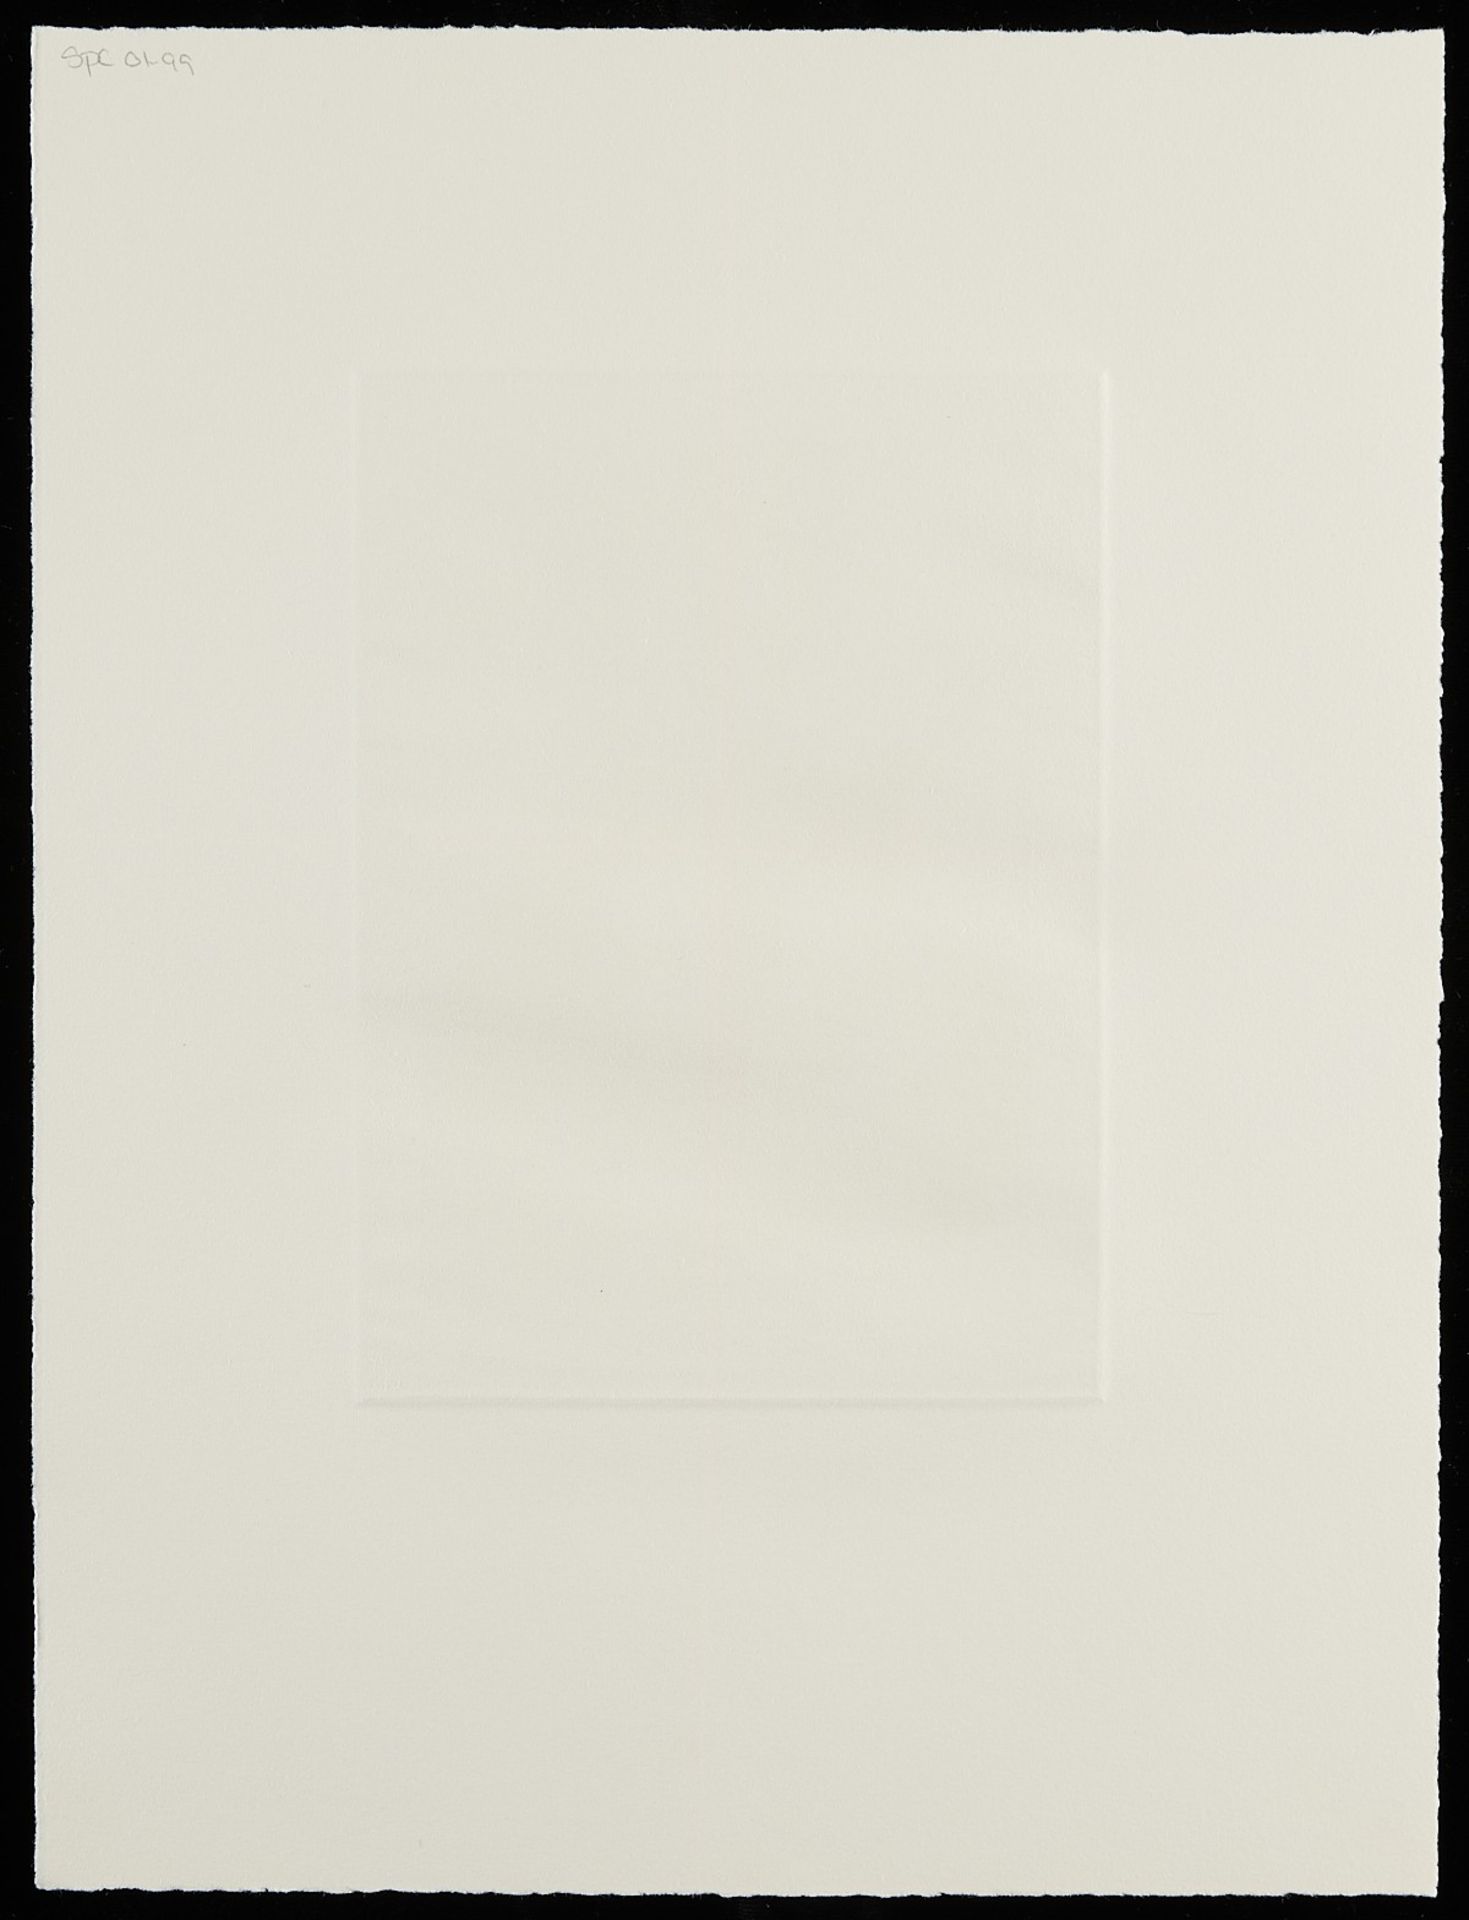 Grp: 8 Chagoya "Return To Goya's Caprichos" Suite - Image 6 of 40